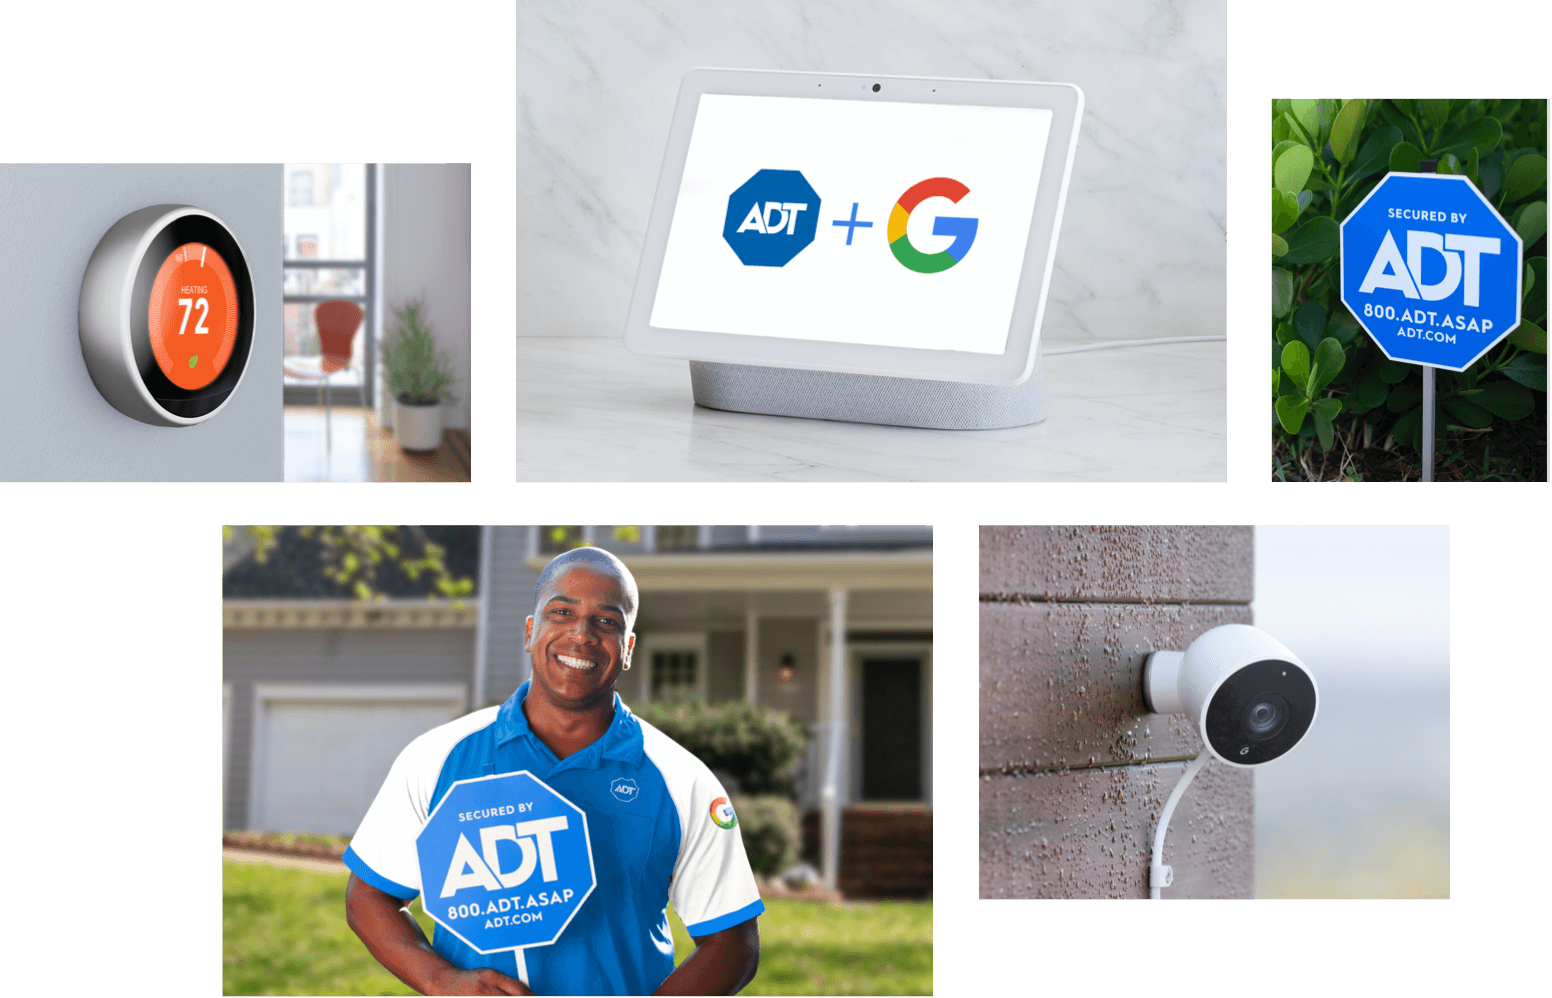 ADT - Google Smart Home Security